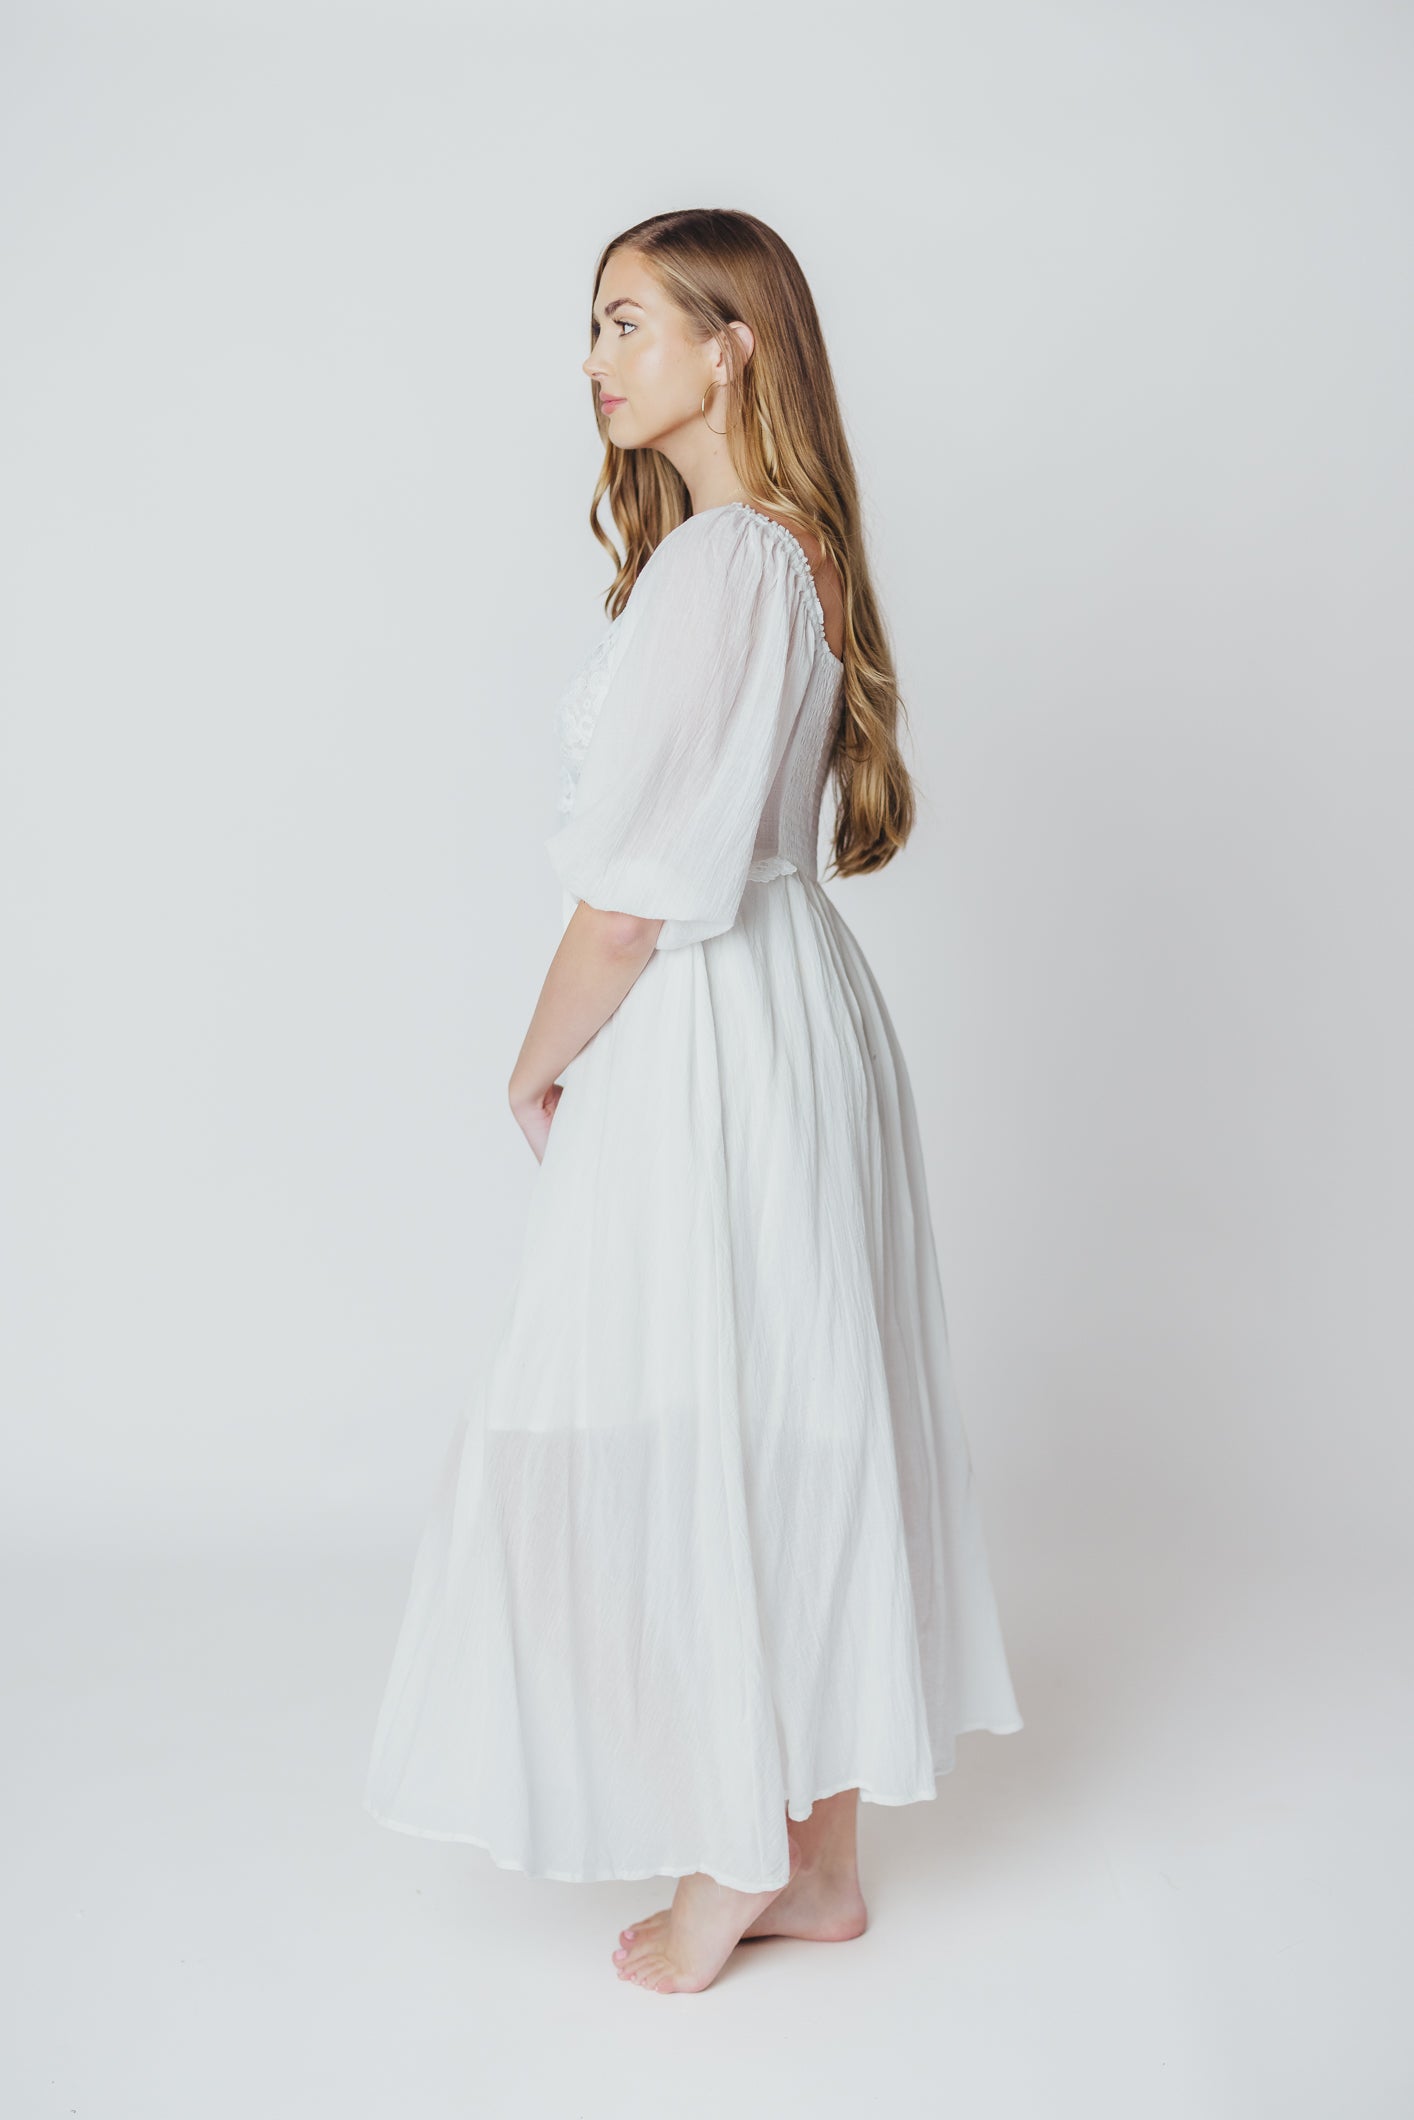 Lana Midi Dress in White - Inclusive Sizing (S-3X) - Cannot Restock